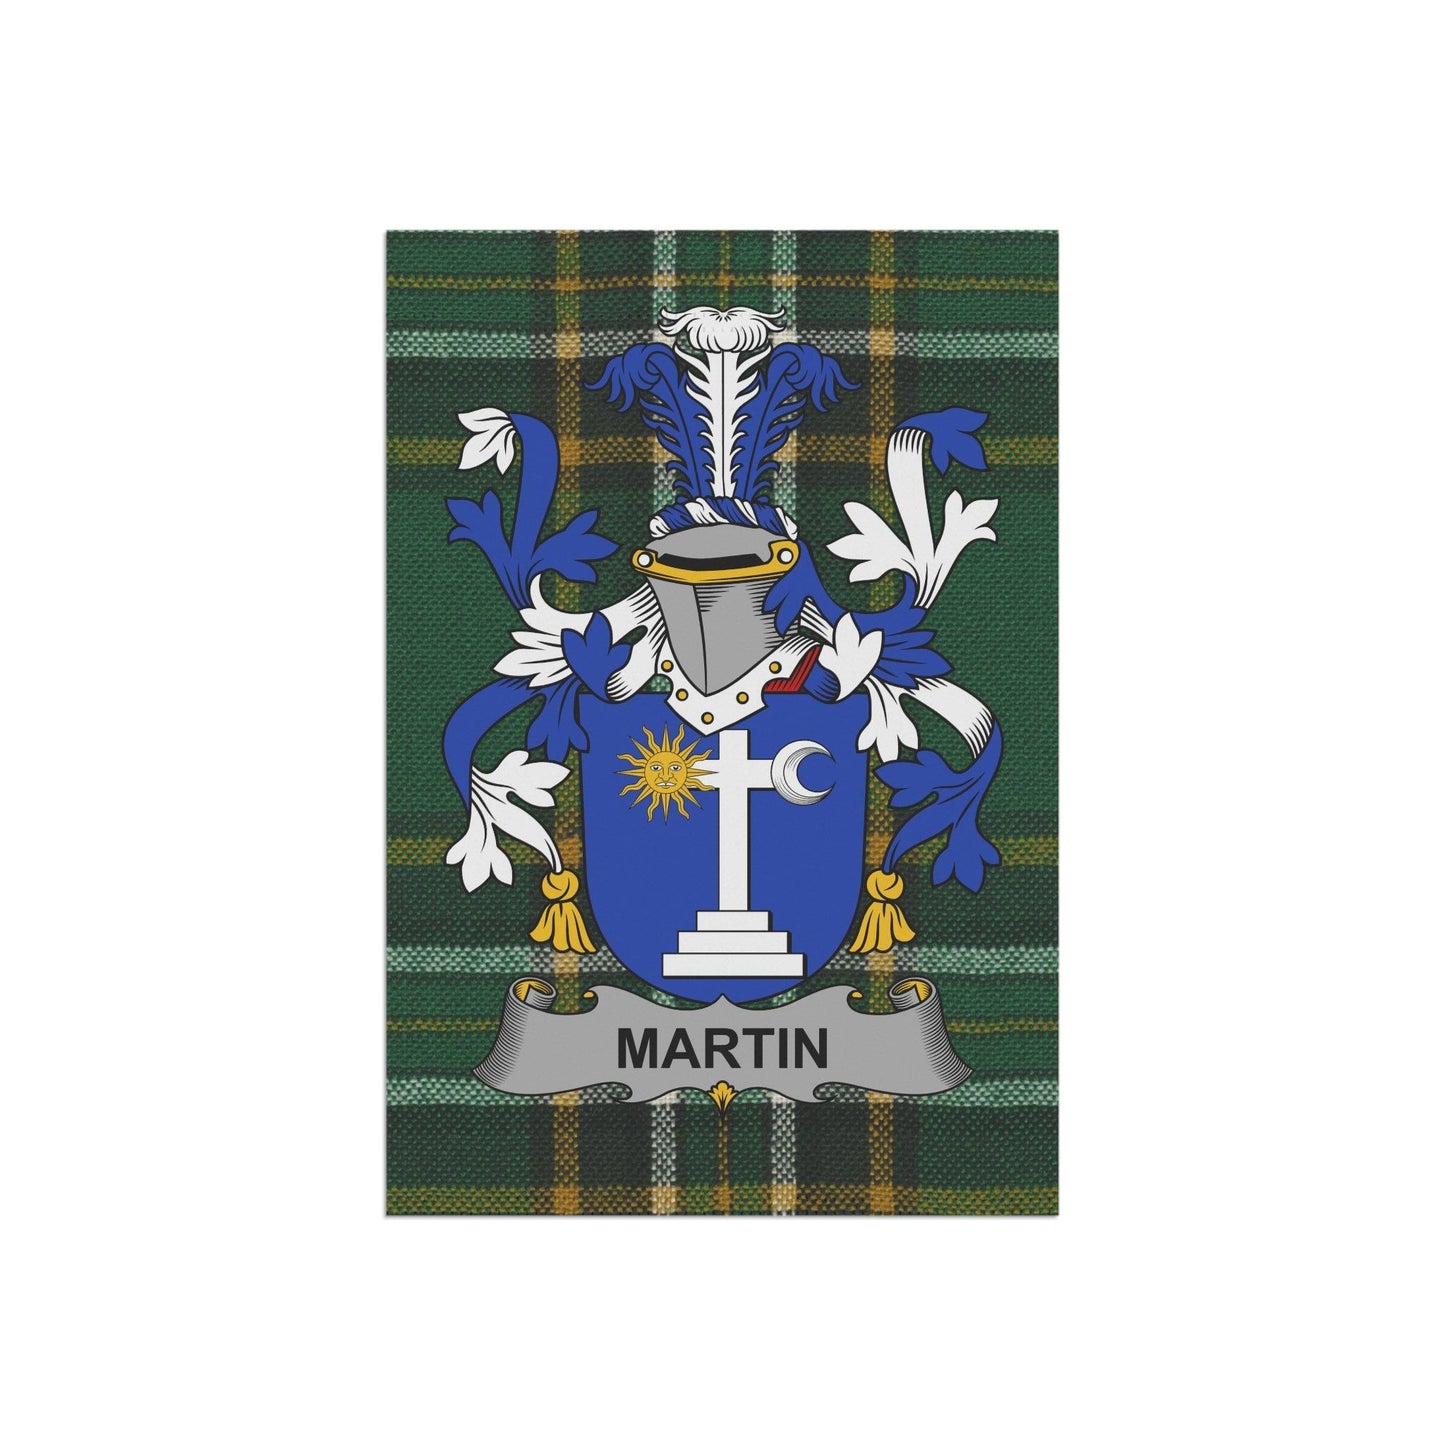 Martin Coat Of Arms Irish Garden Flag